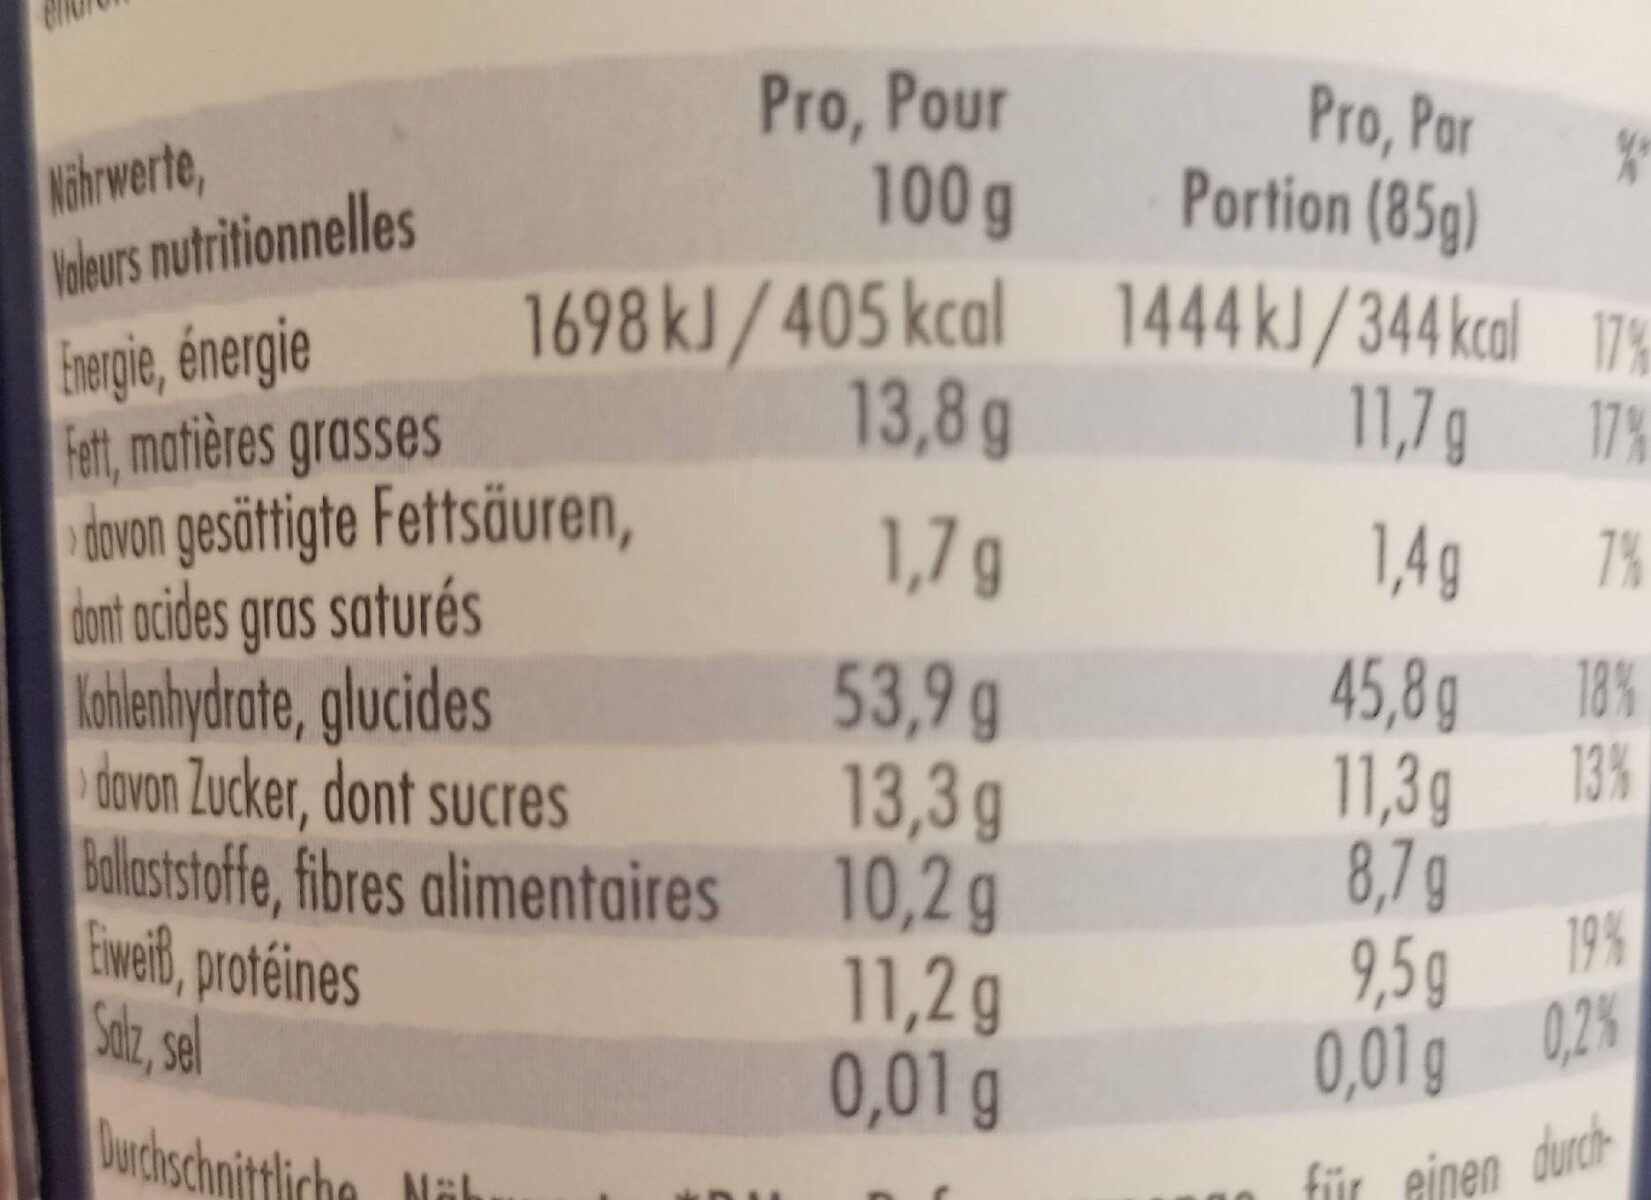 Blaubeer Vanille Granola - Nutrition facts - fr